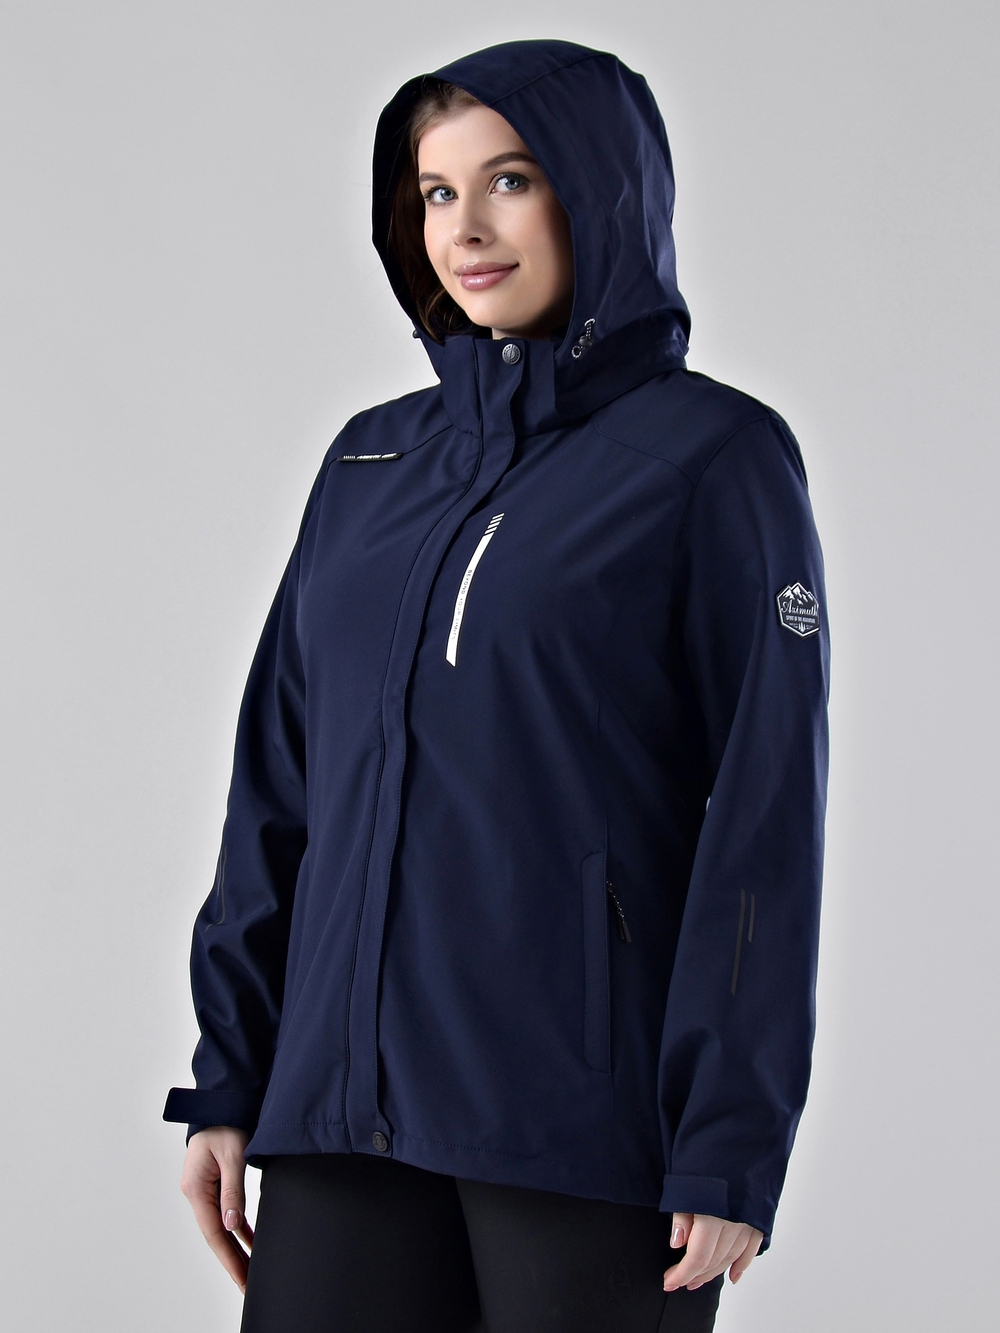 Женская куртка-виндстоппер софтшелл на флисе БР 221/21836-1_208 Темно-синий